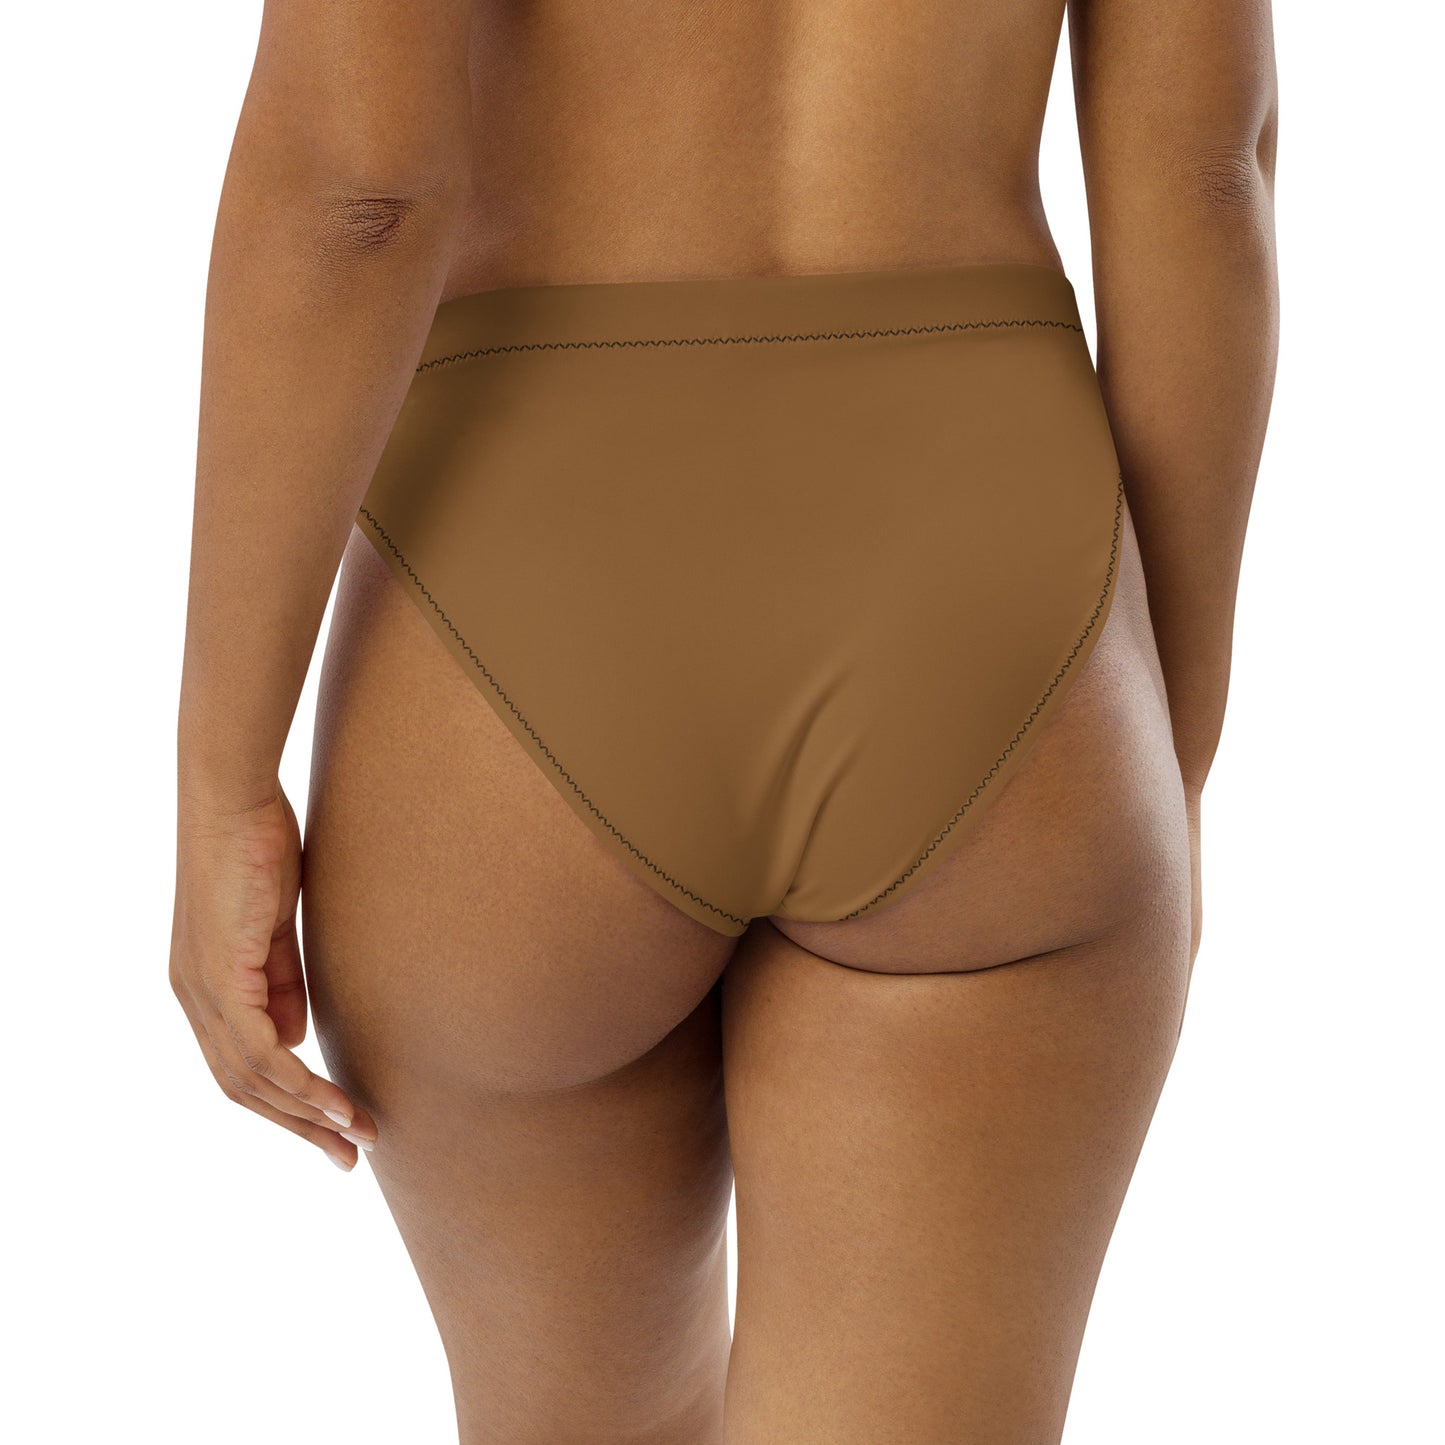 Brown high-waisted bikini bottom